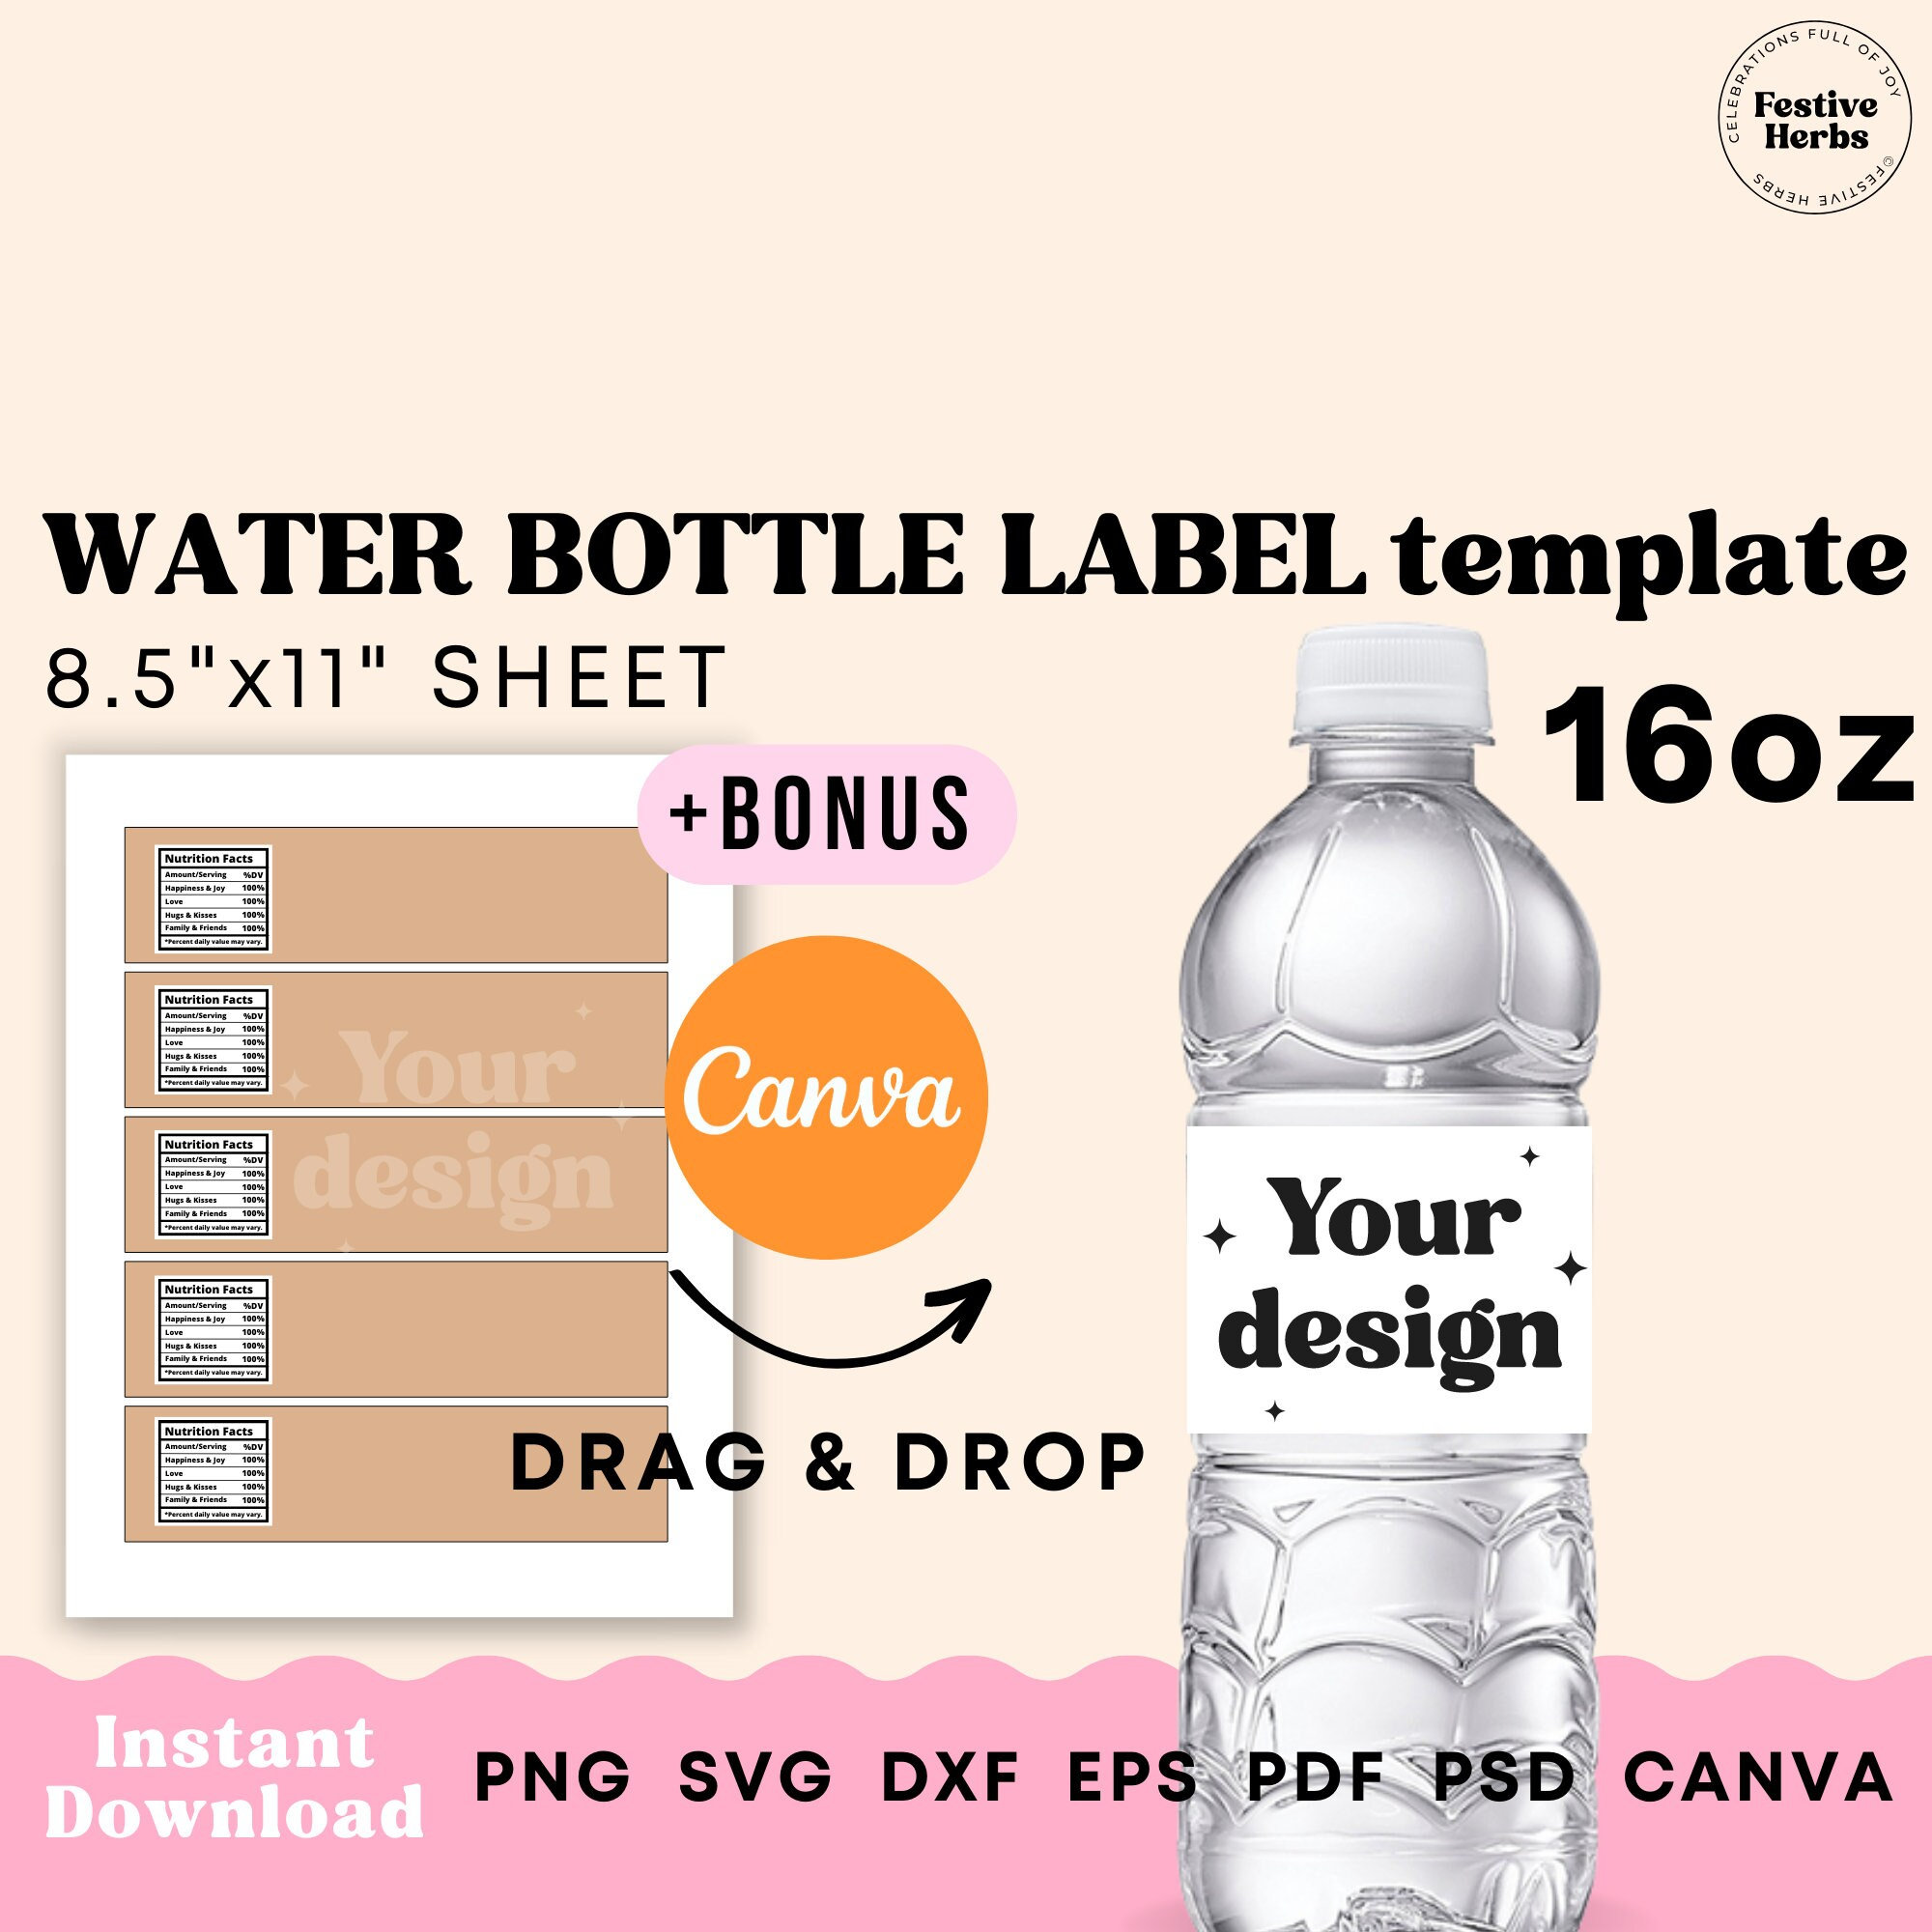 Amazing Spiderman Birthday Water Bottle Labels – iCustomLabel